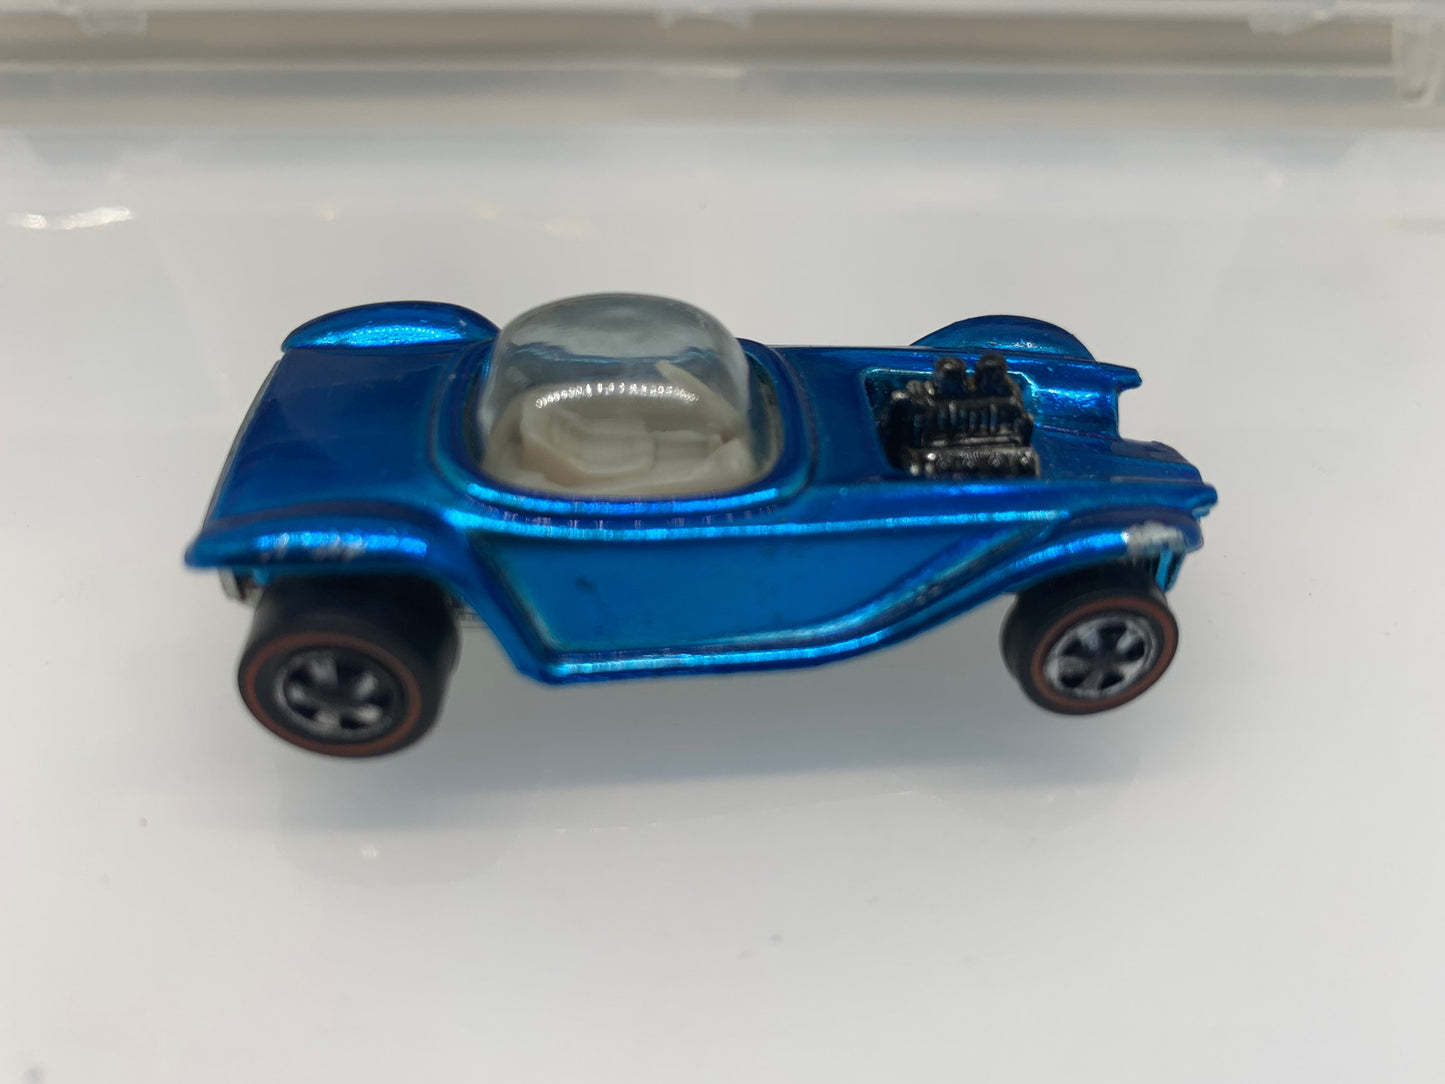 Hot Wheels Redline Beatnik Bandit Blue - 1960s Toy - Vintage Diecast Metal Toy Car - Vintage Hot Wheels